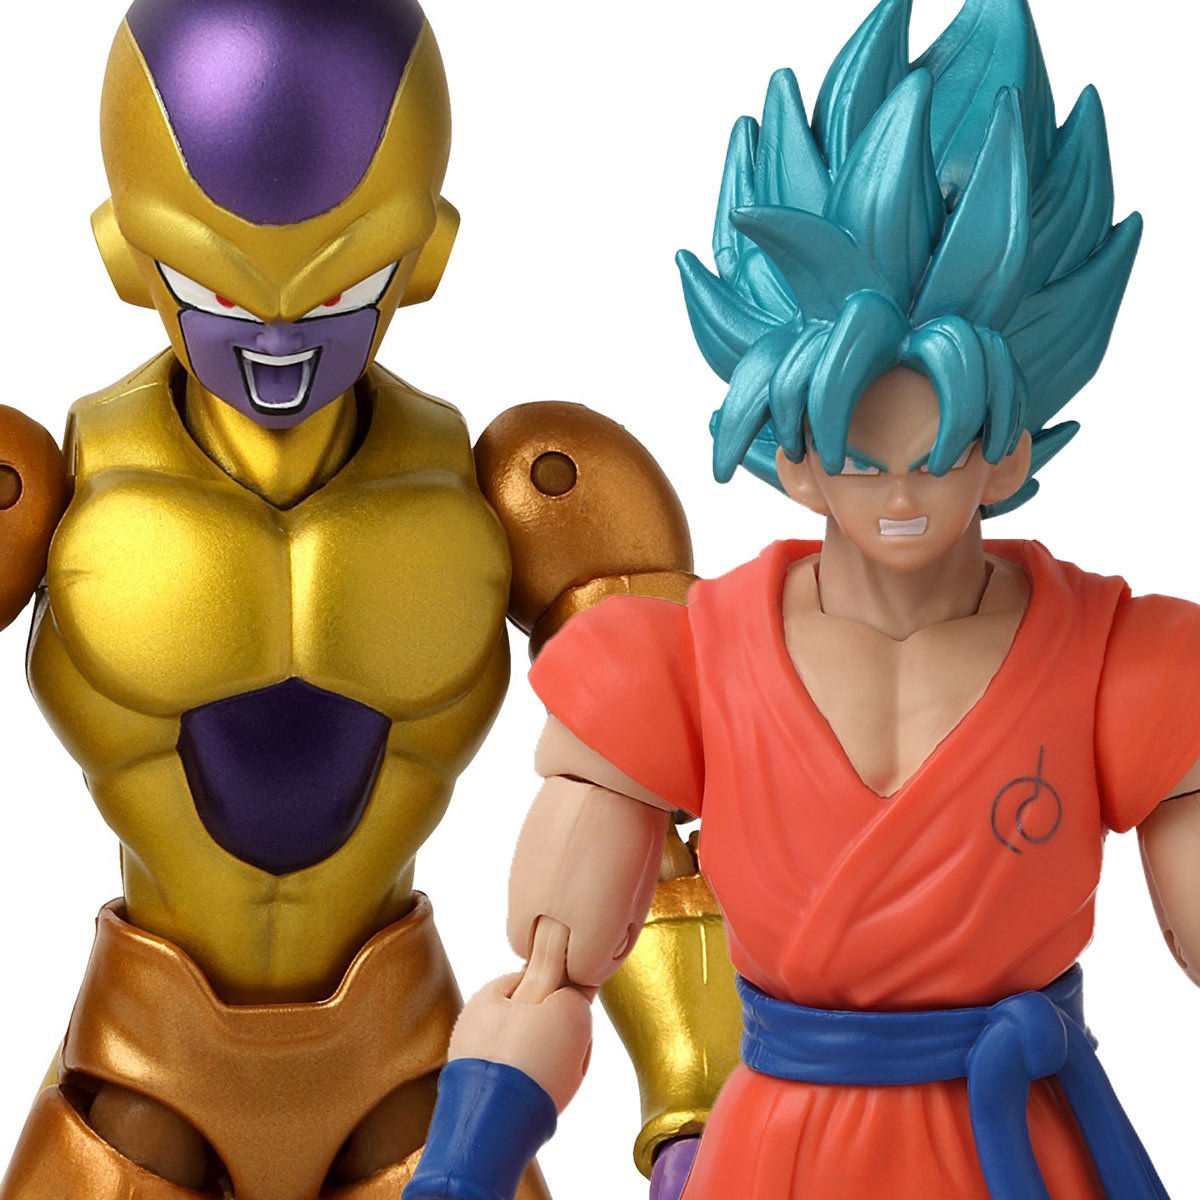 Bandai Dragon Ball Stars Series Super Saiyan Blue Goku Bandai Figure for  sale online